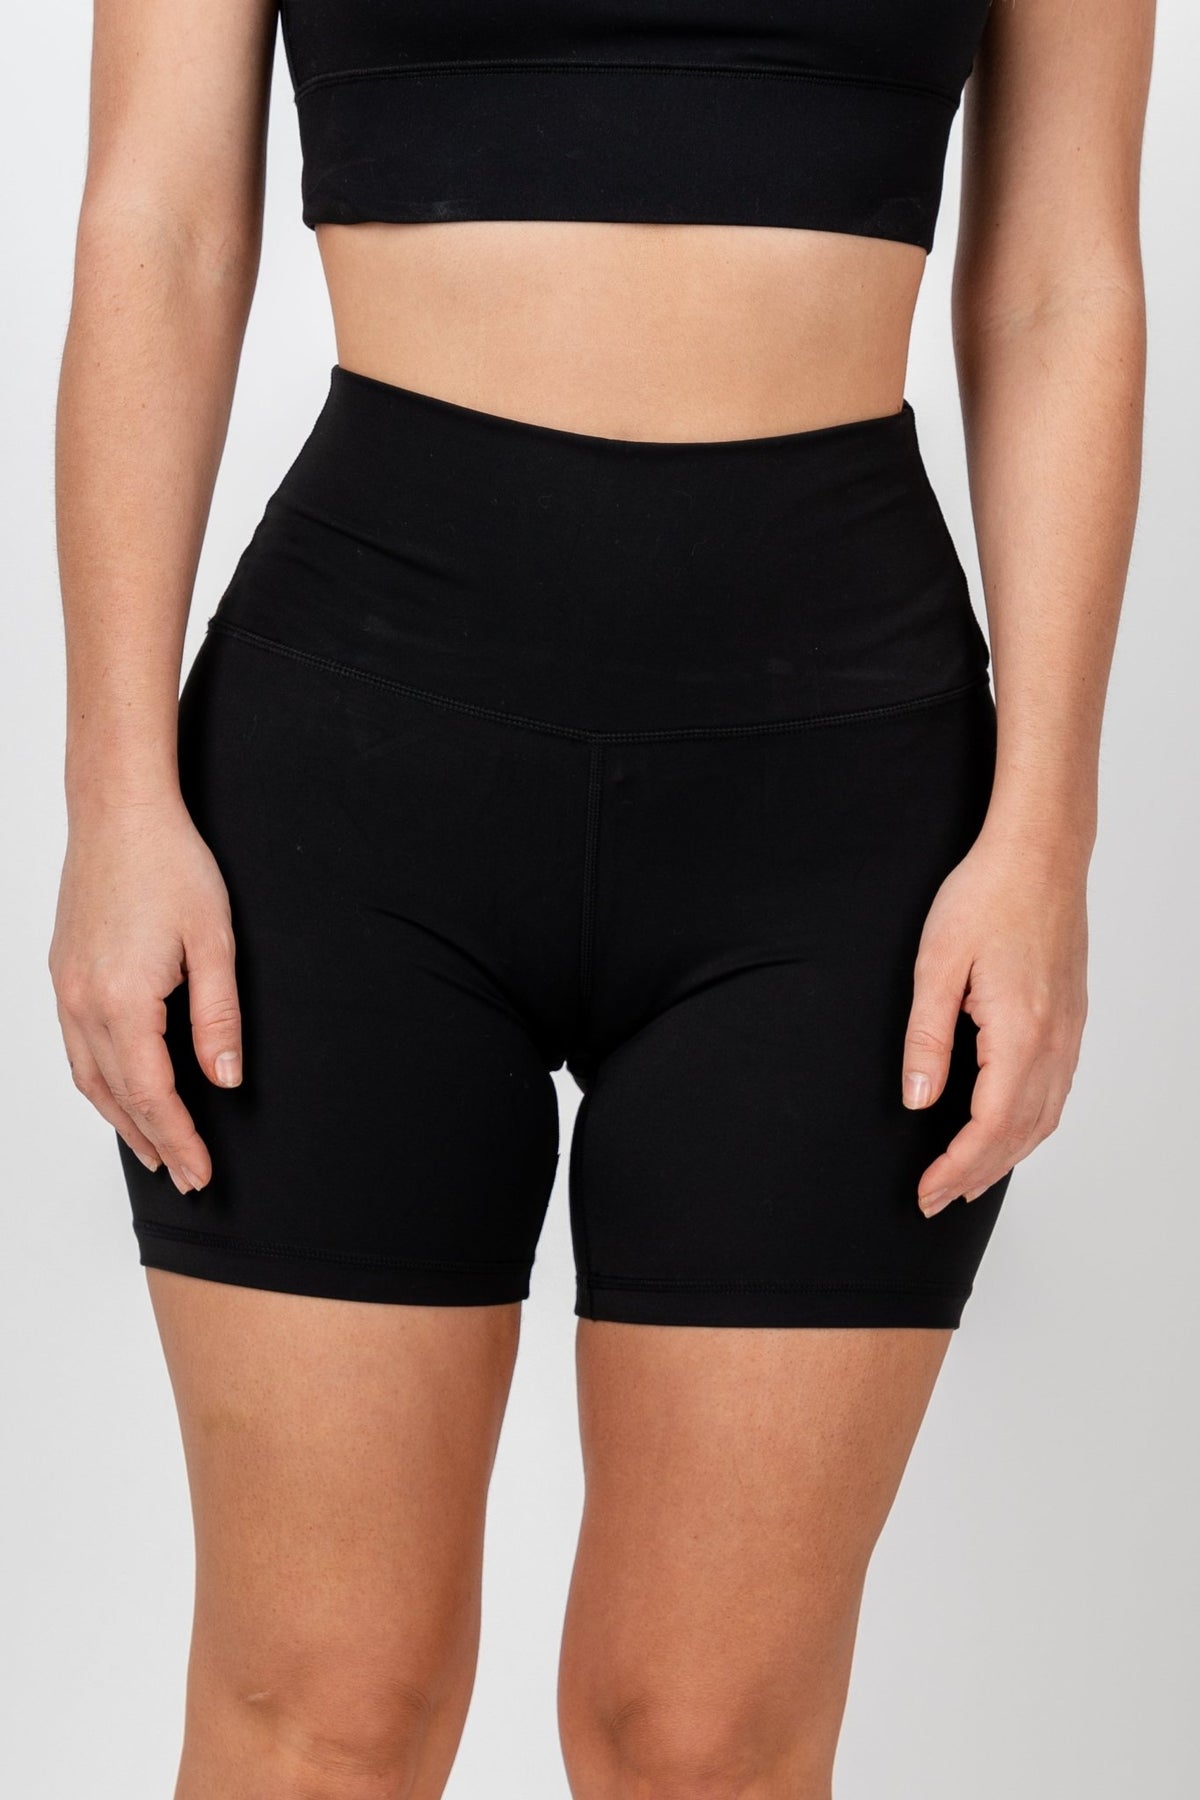 6 inch inseam biker shorts black - Cute biker shorts - Trendy Shorts at Lush Fashion Lounge Boutique in Oklahoma City